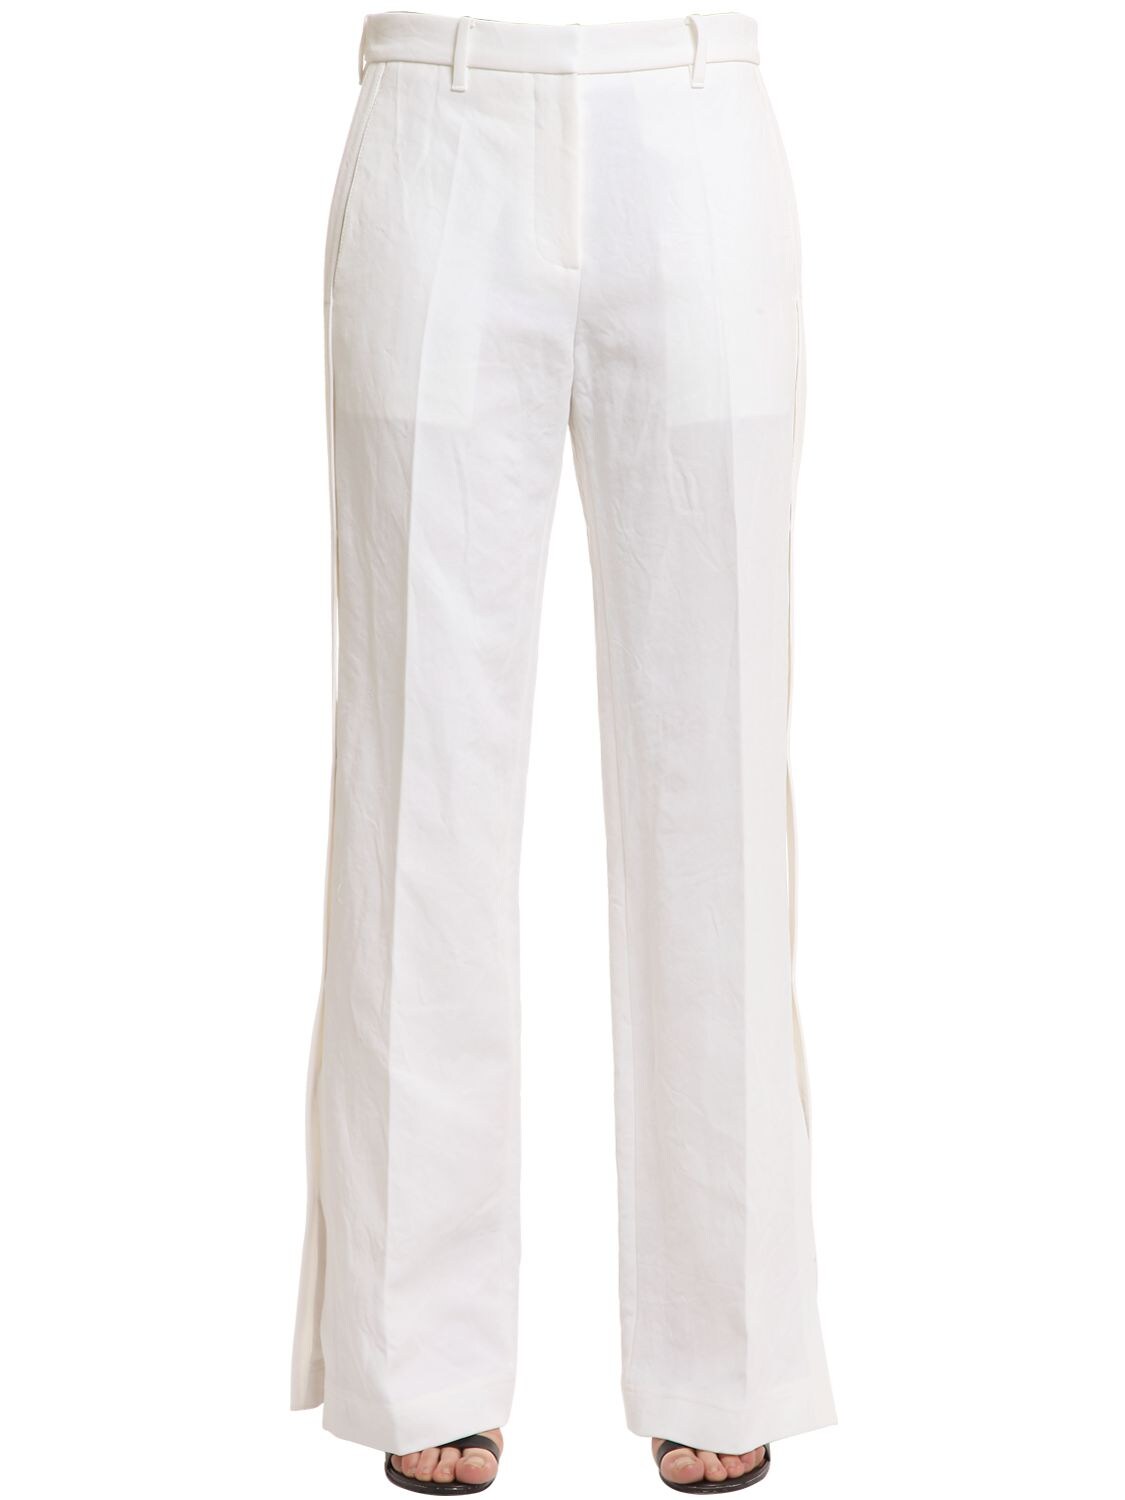 Dry Cotton Tailoring Pants